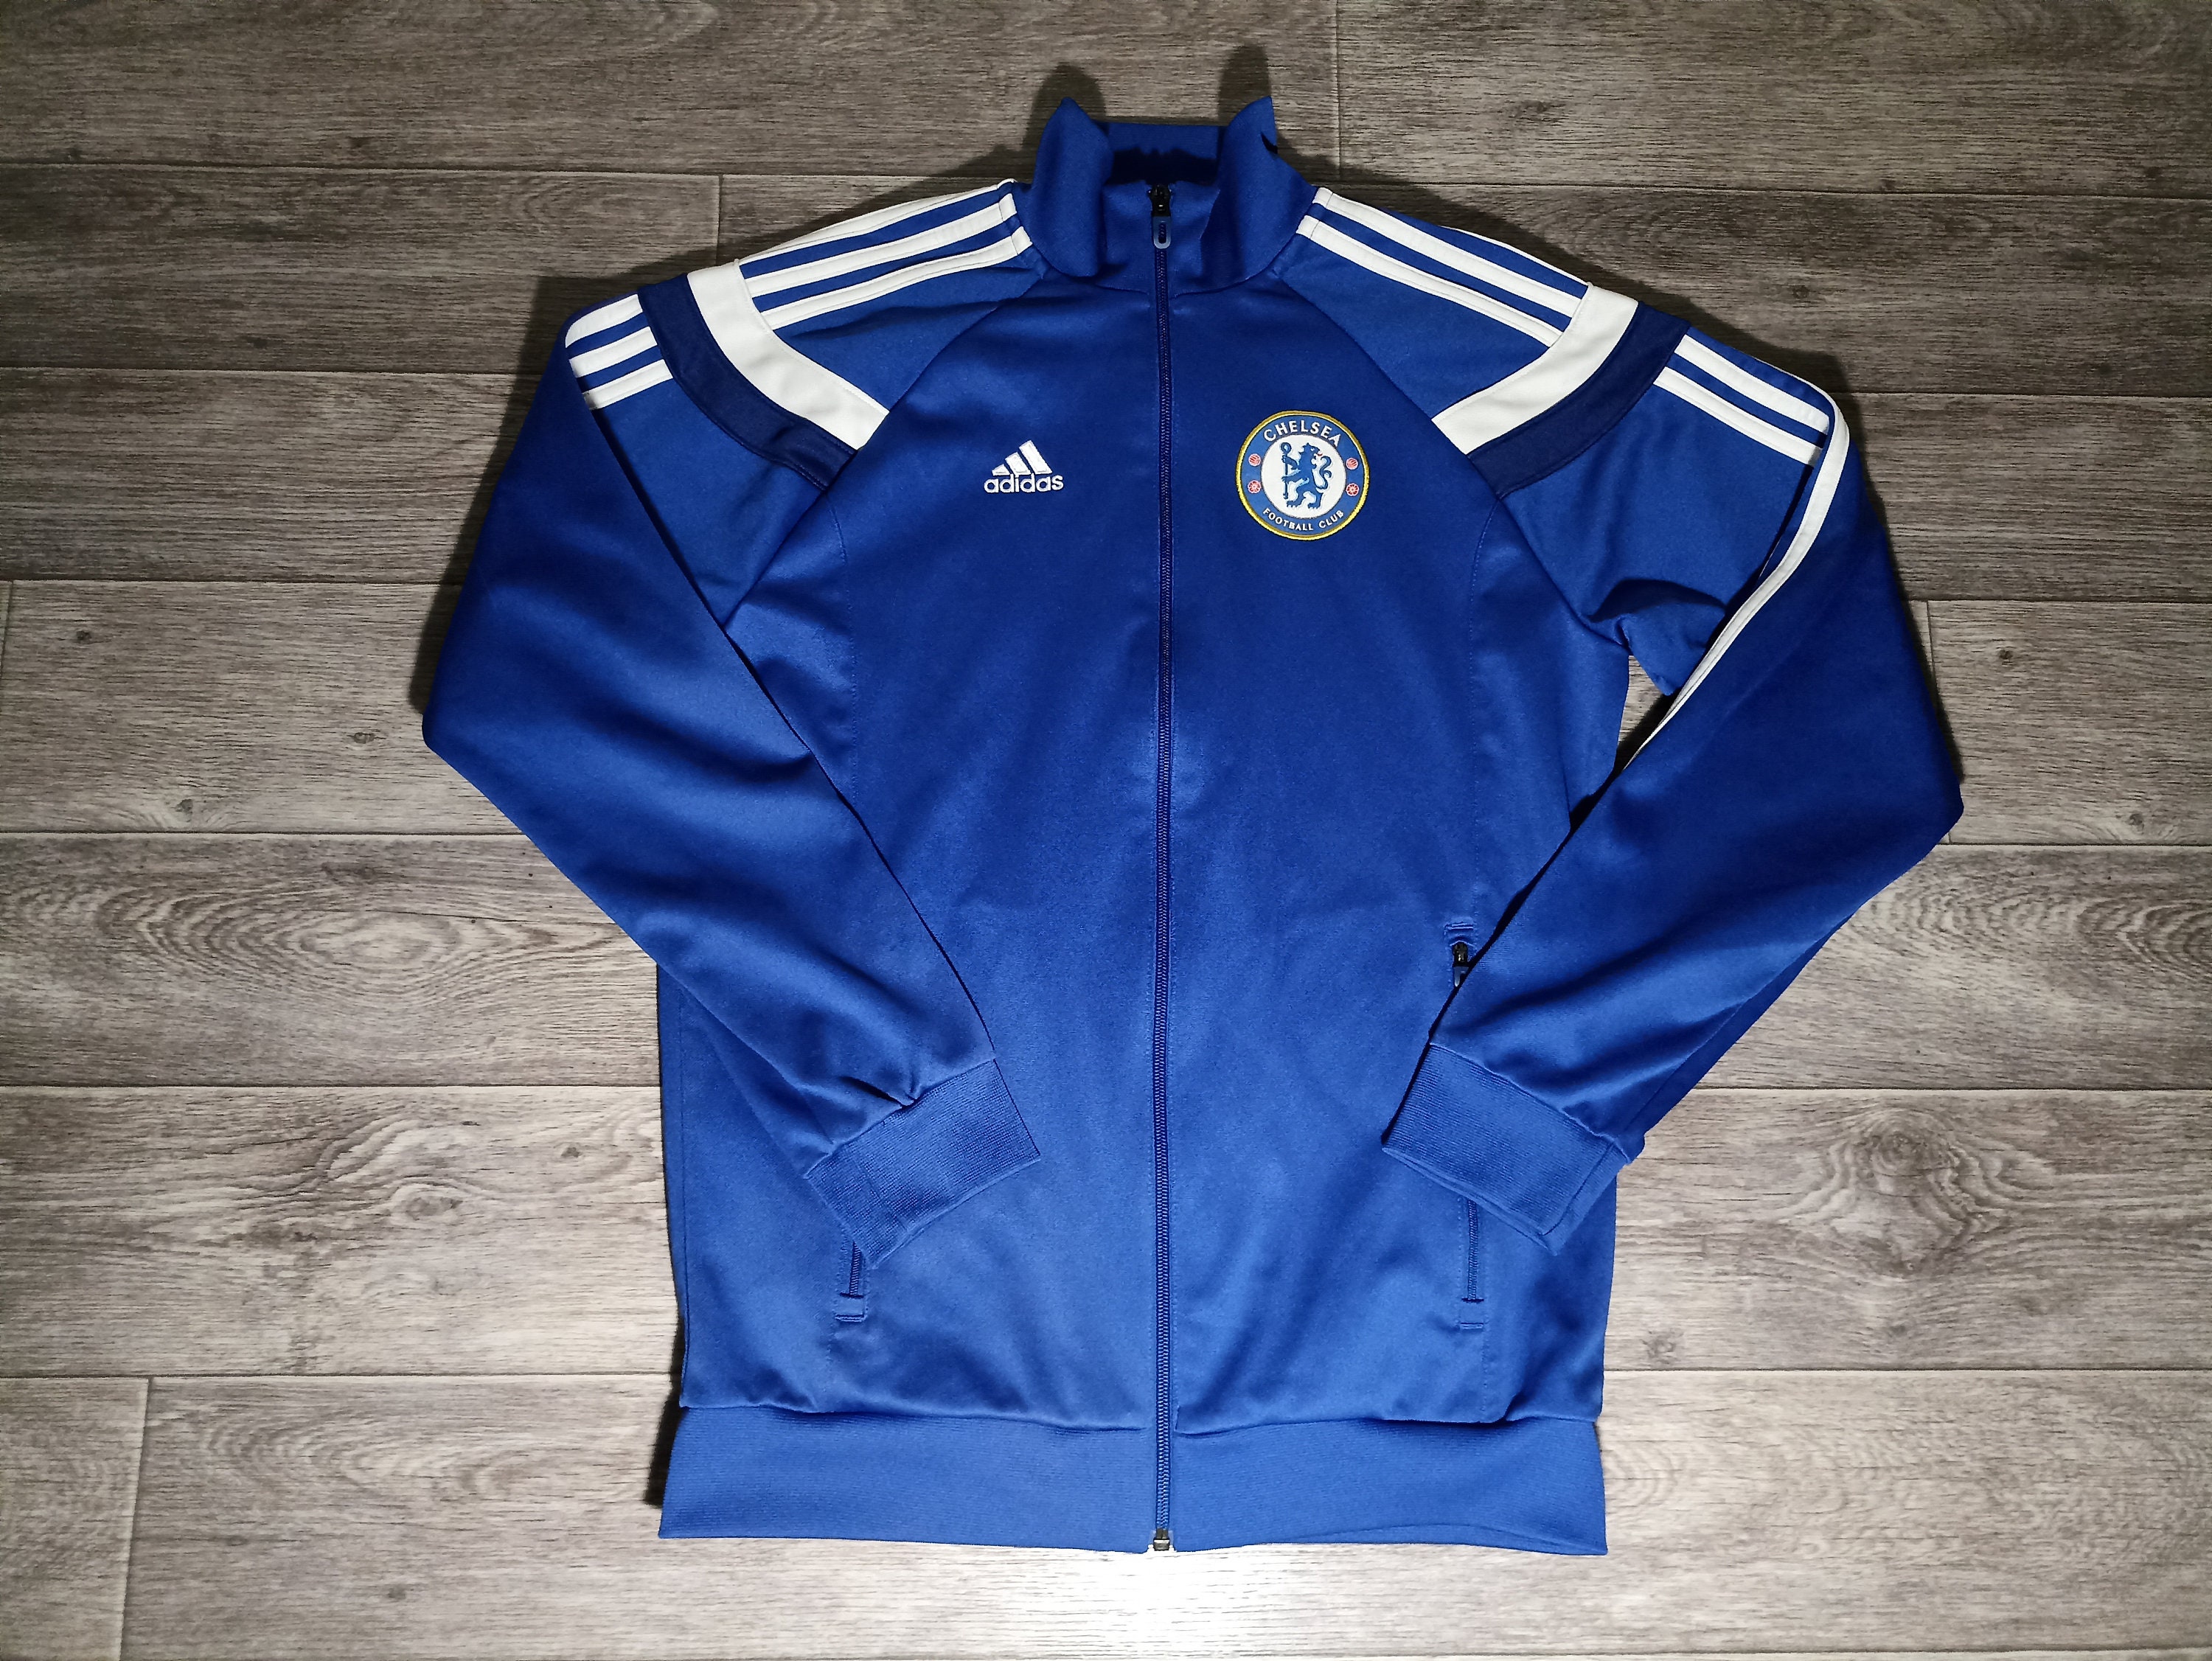 Chelsea FC CFC CHE England Adidas 2014/15 Blue White Men's Sports Soccer  Football Jacket Tracksuit Shirt Jersey Uniform Knitwear Size S 